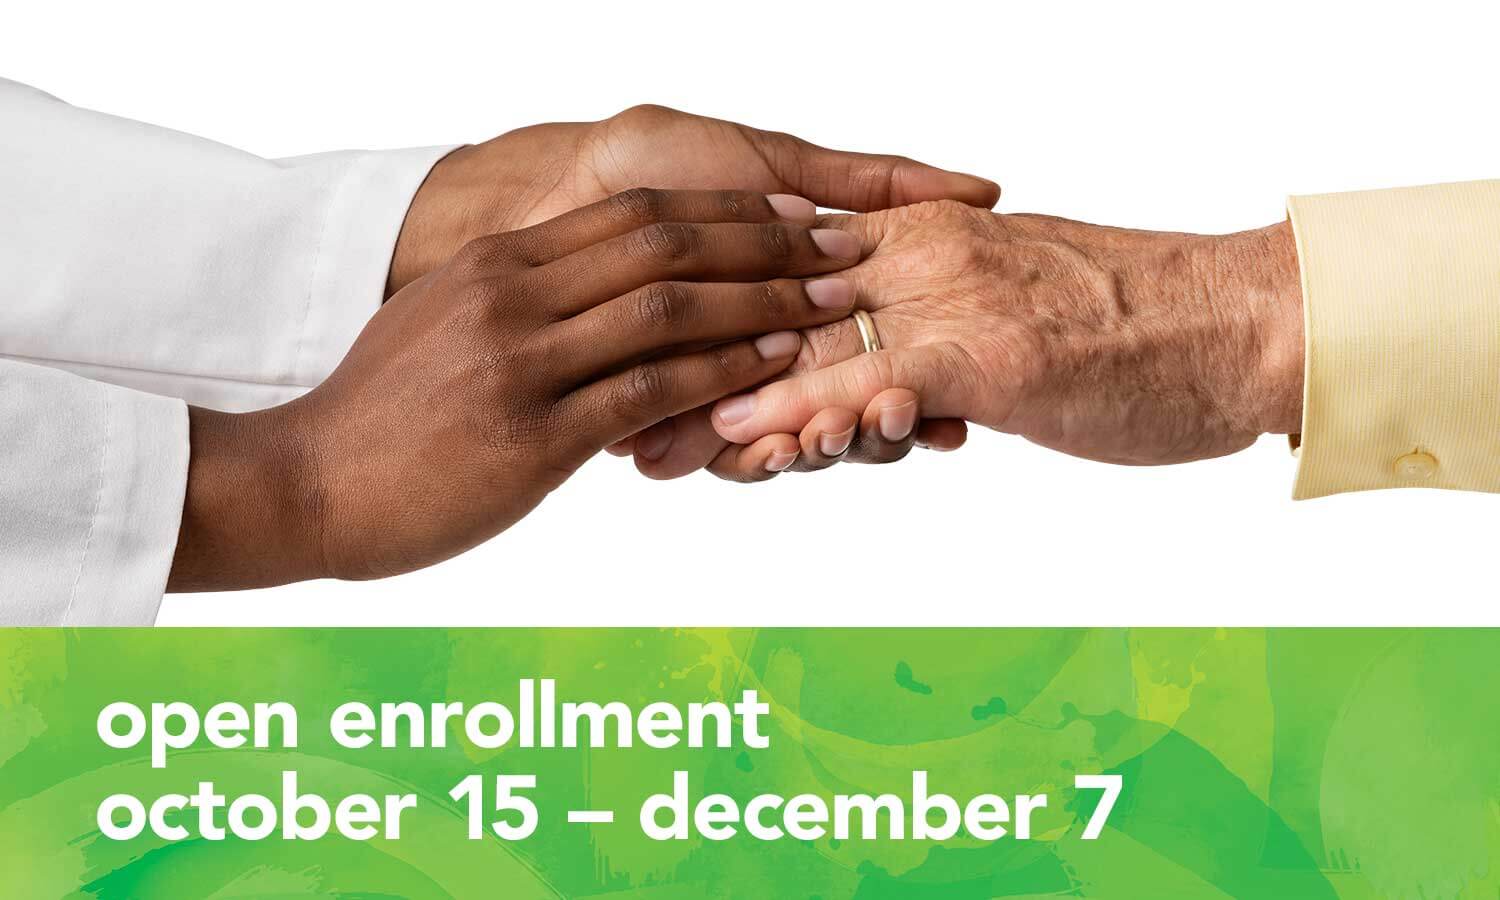 open enrollment october 15 - december 7